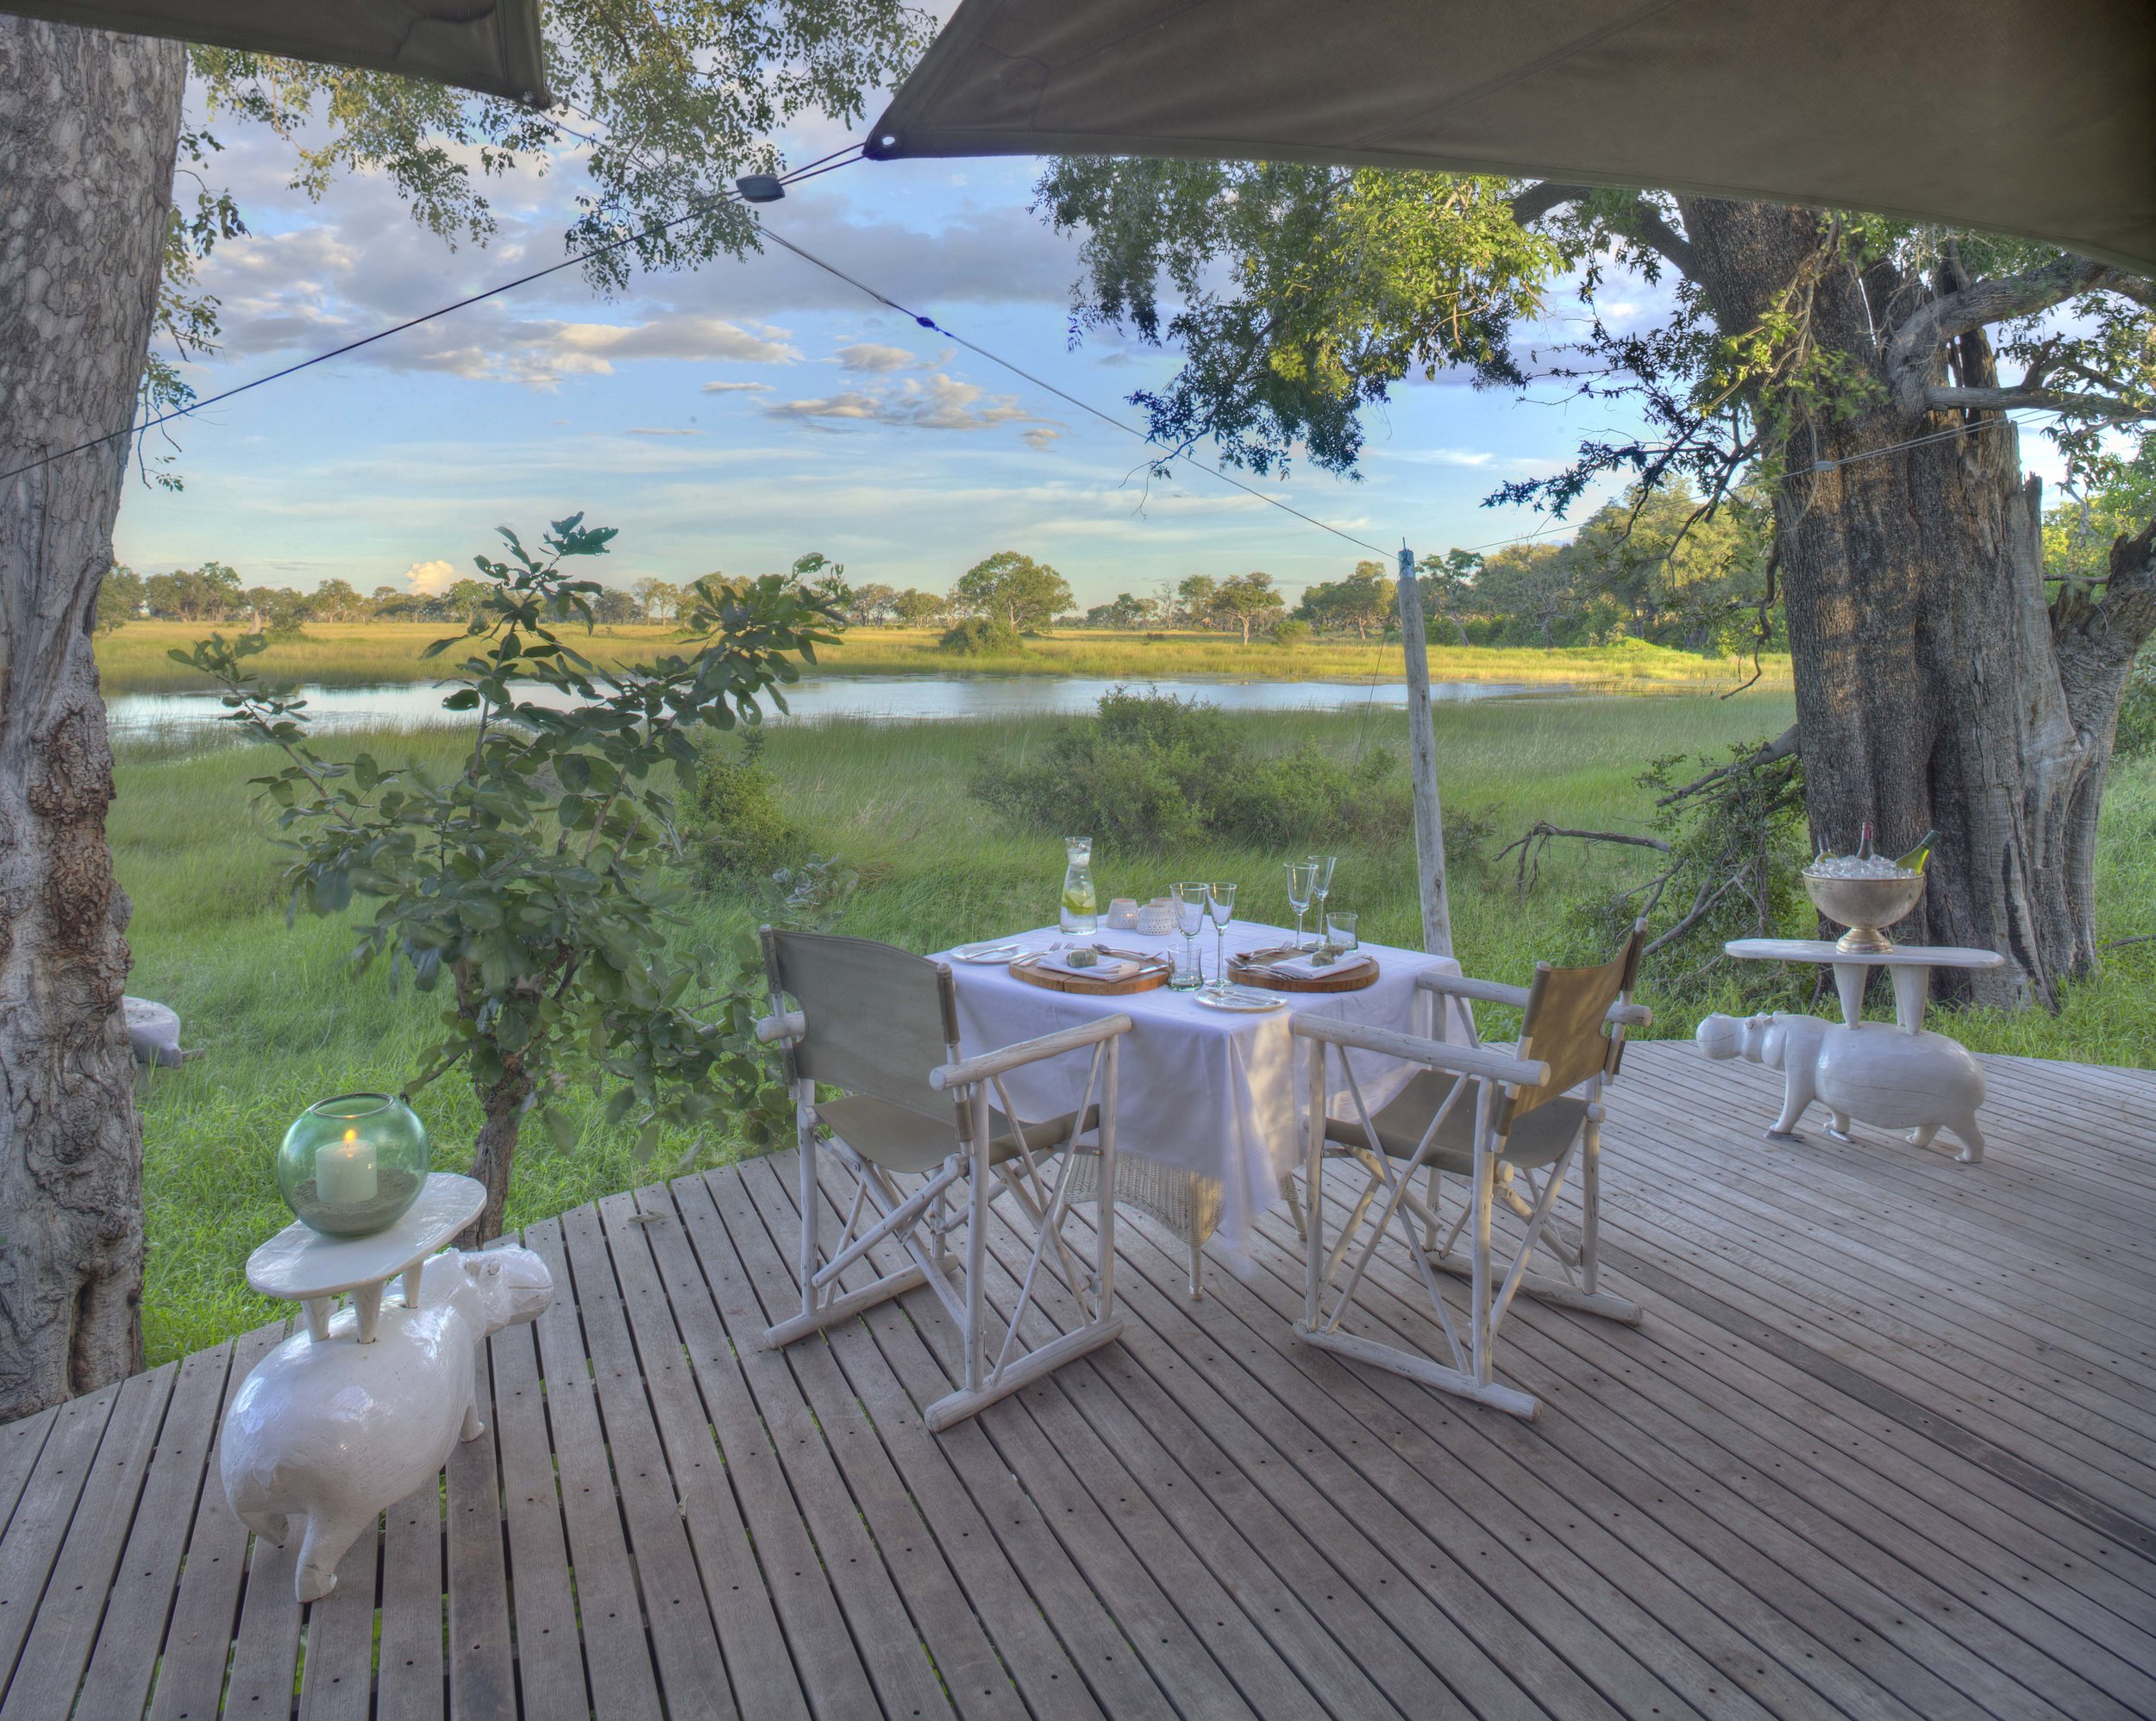 andBeyond-Xaranna-Okavango-Delta-Camp-Guest-Area12.jpg